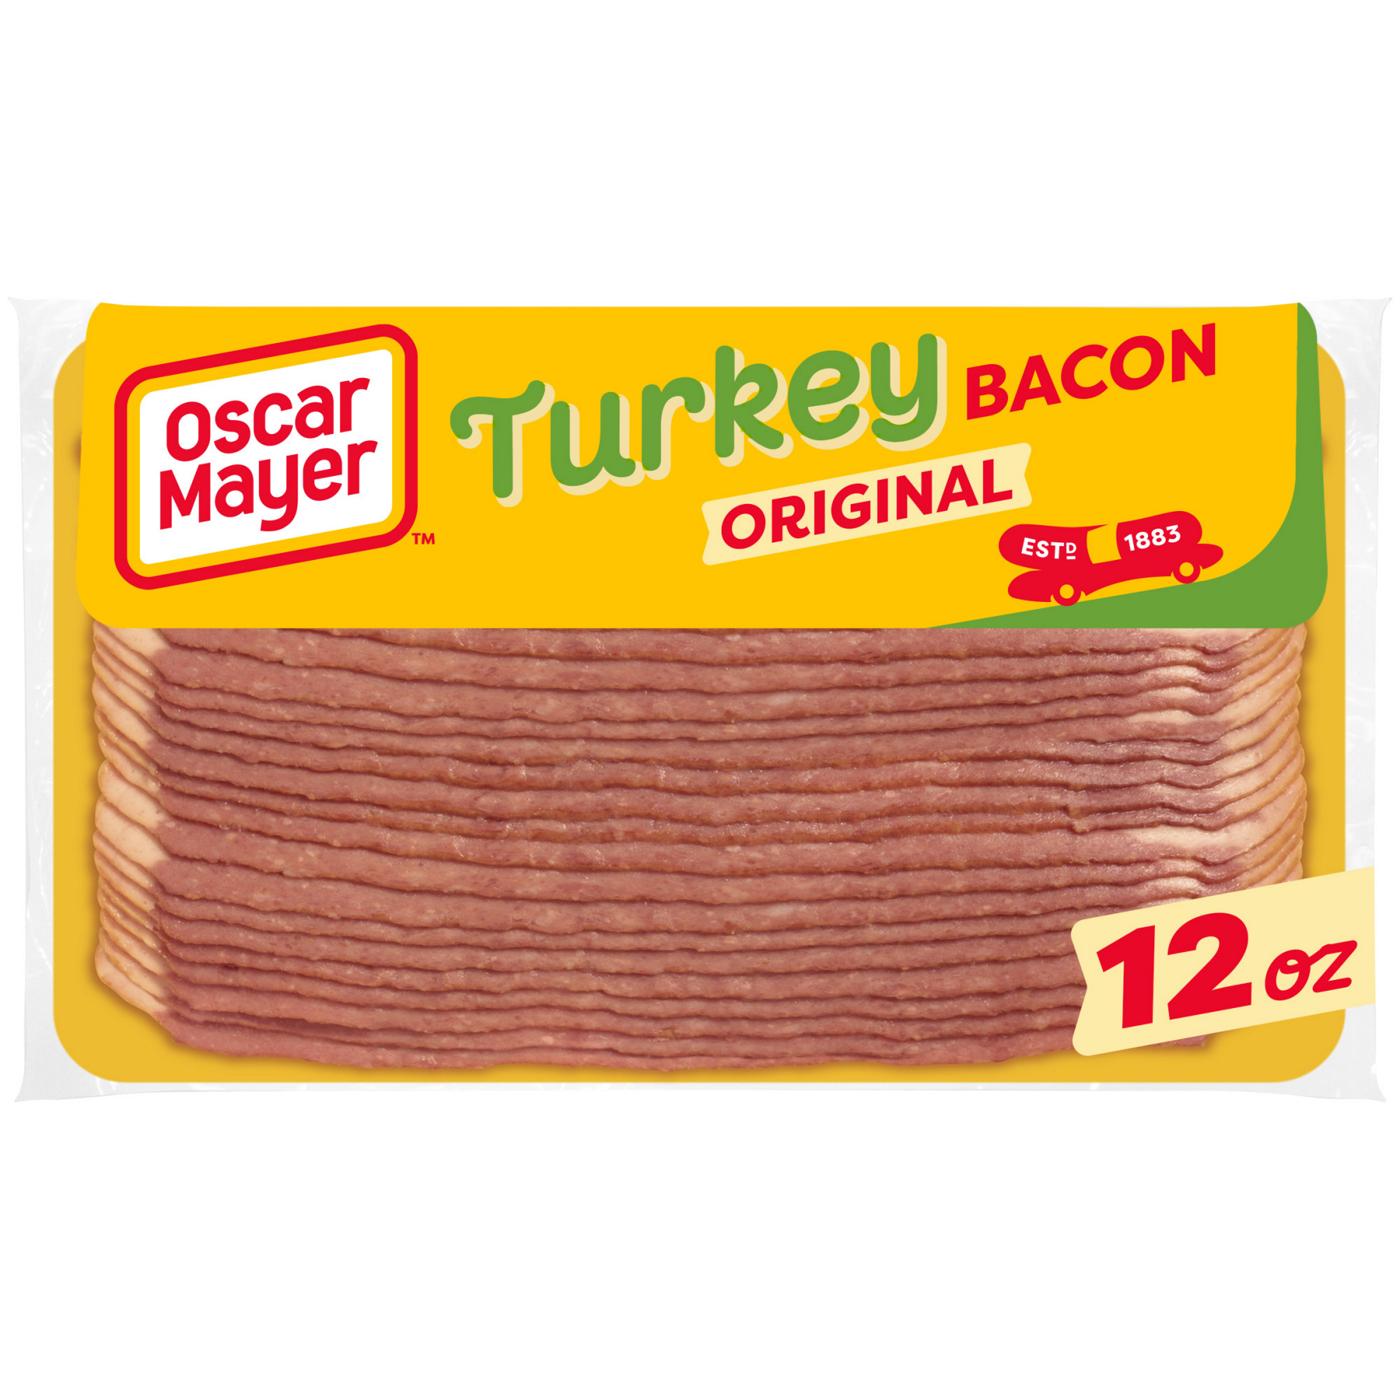 Oscar Mayer Original Turkey Bacon; image 1 of 6